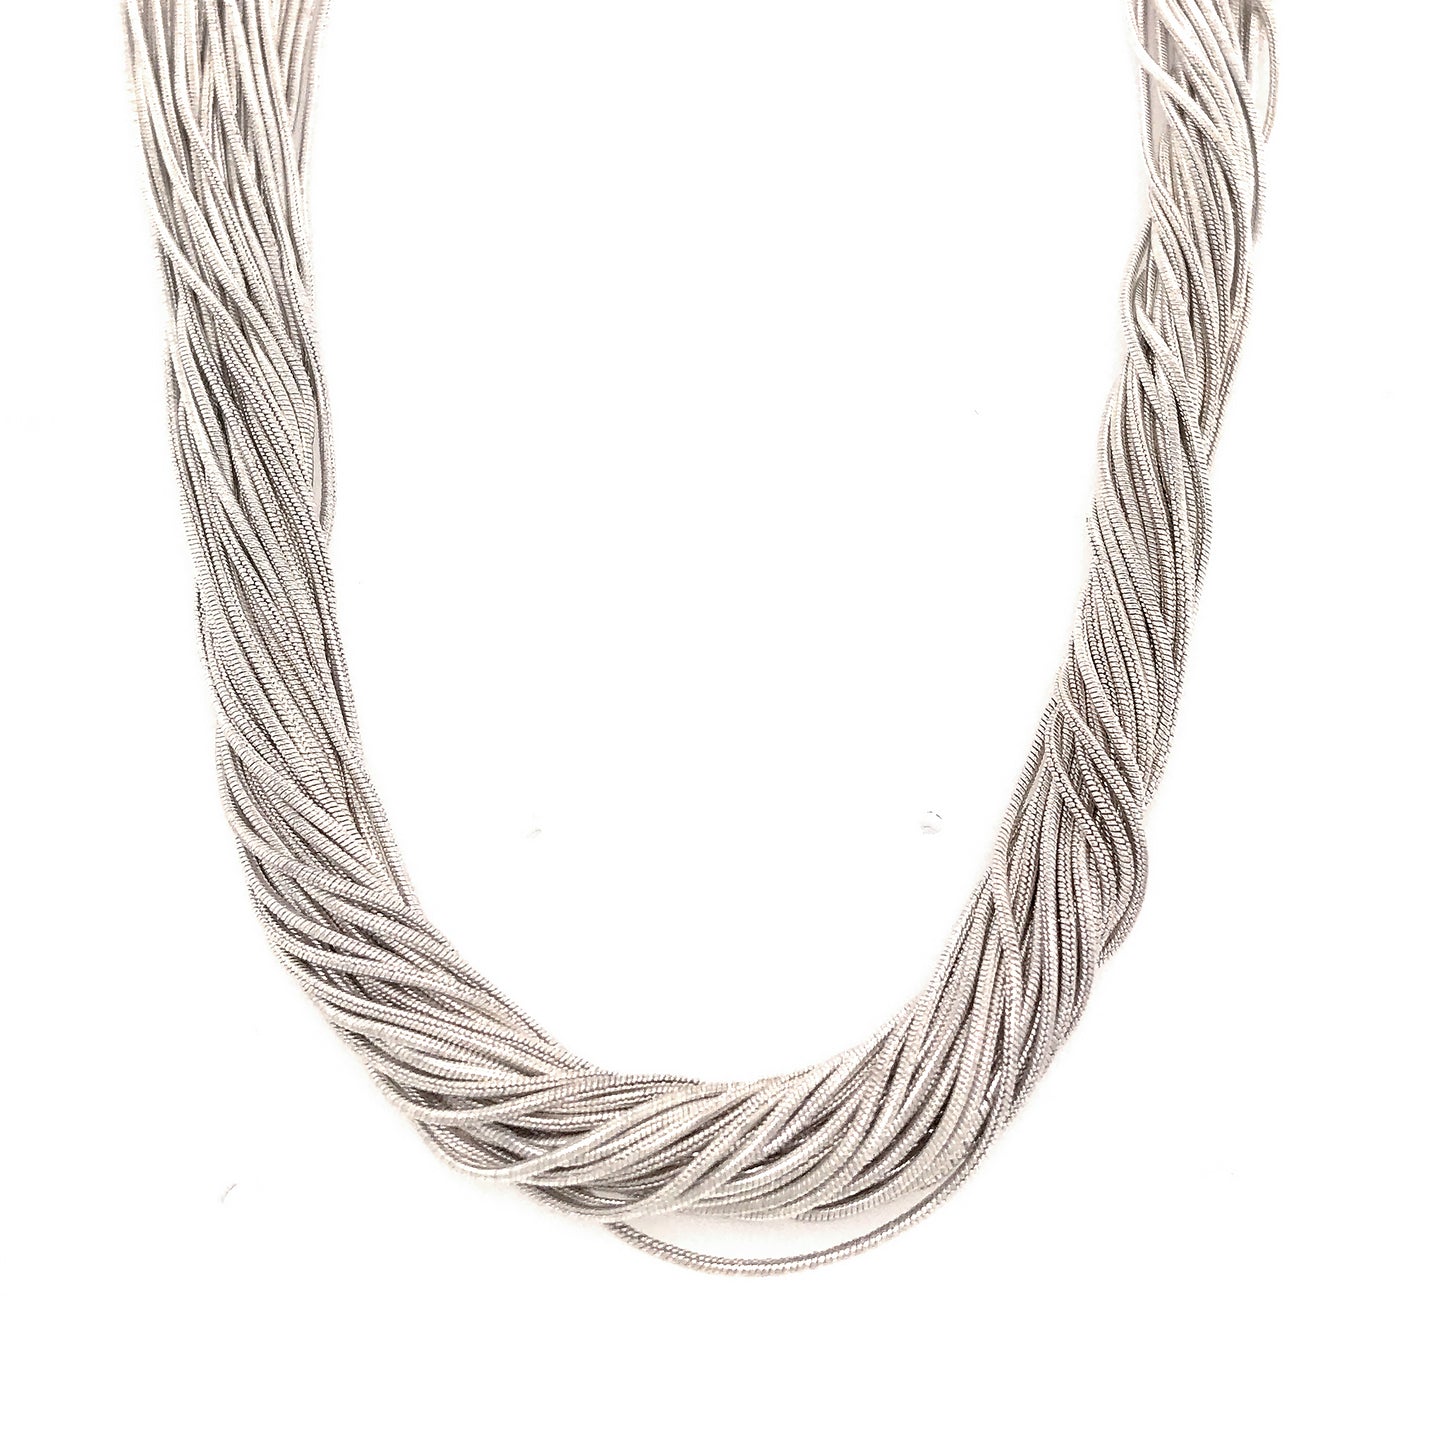 Italian Made Multi-Strand Sterling Silver Necklace